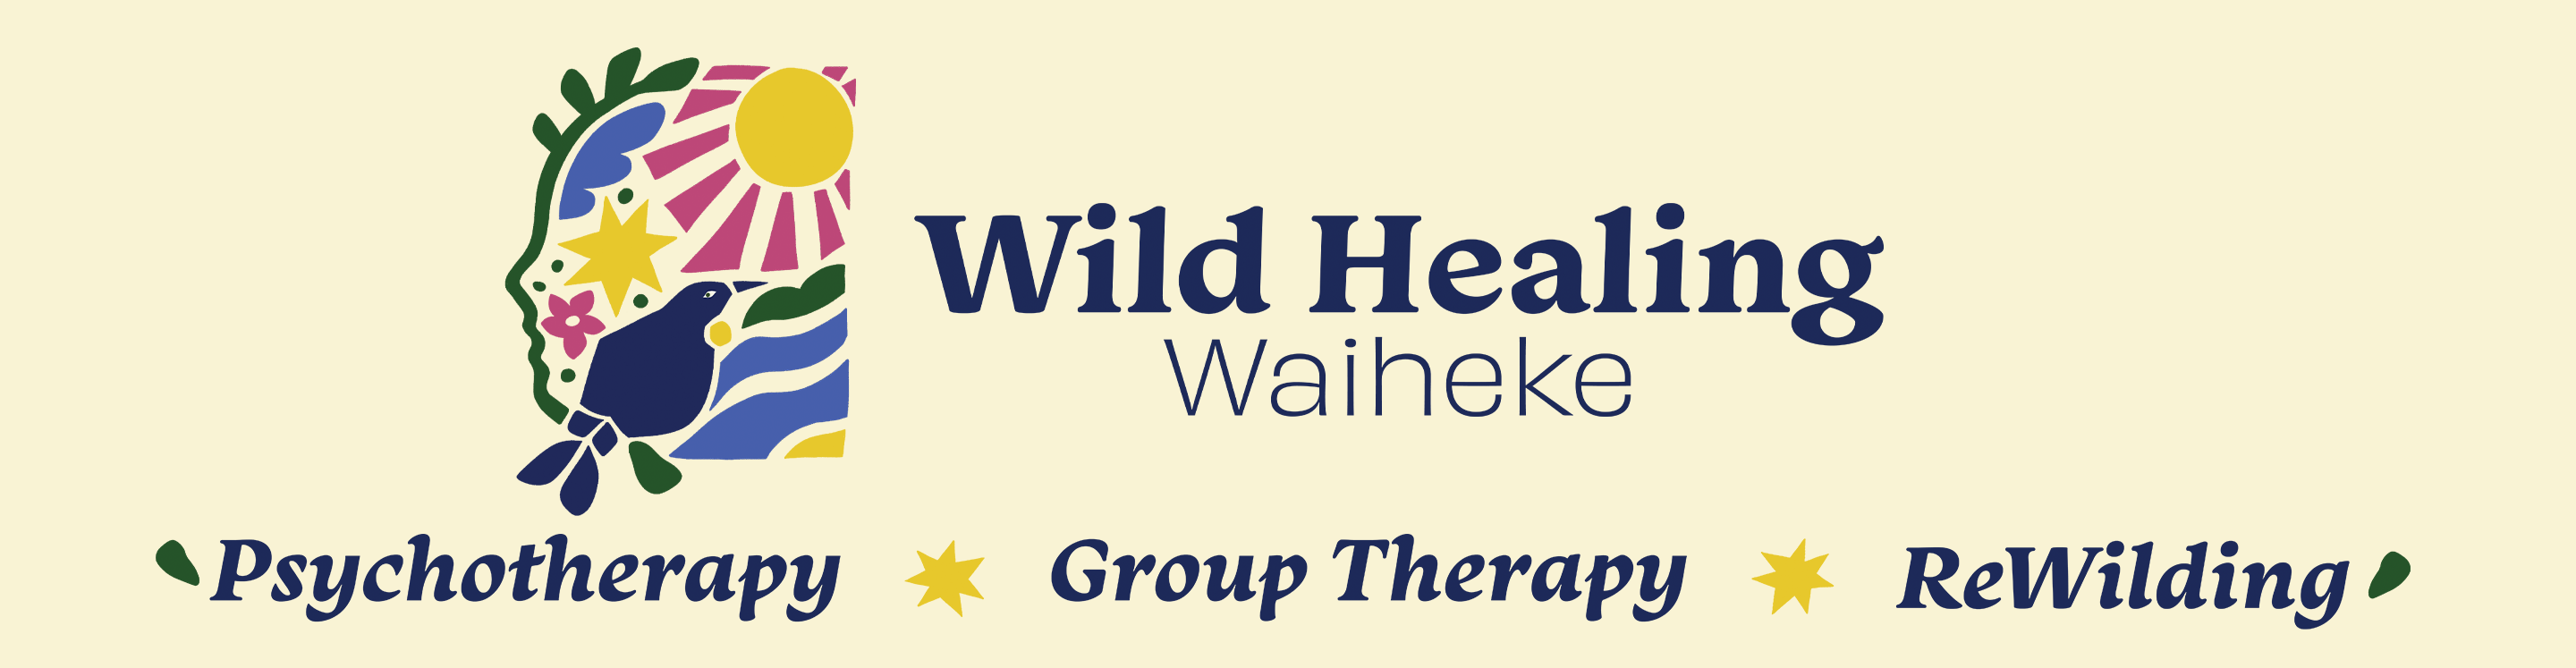 Wild Healing Waiheke - Psychotherapy, Group Therapy, & ReWilding